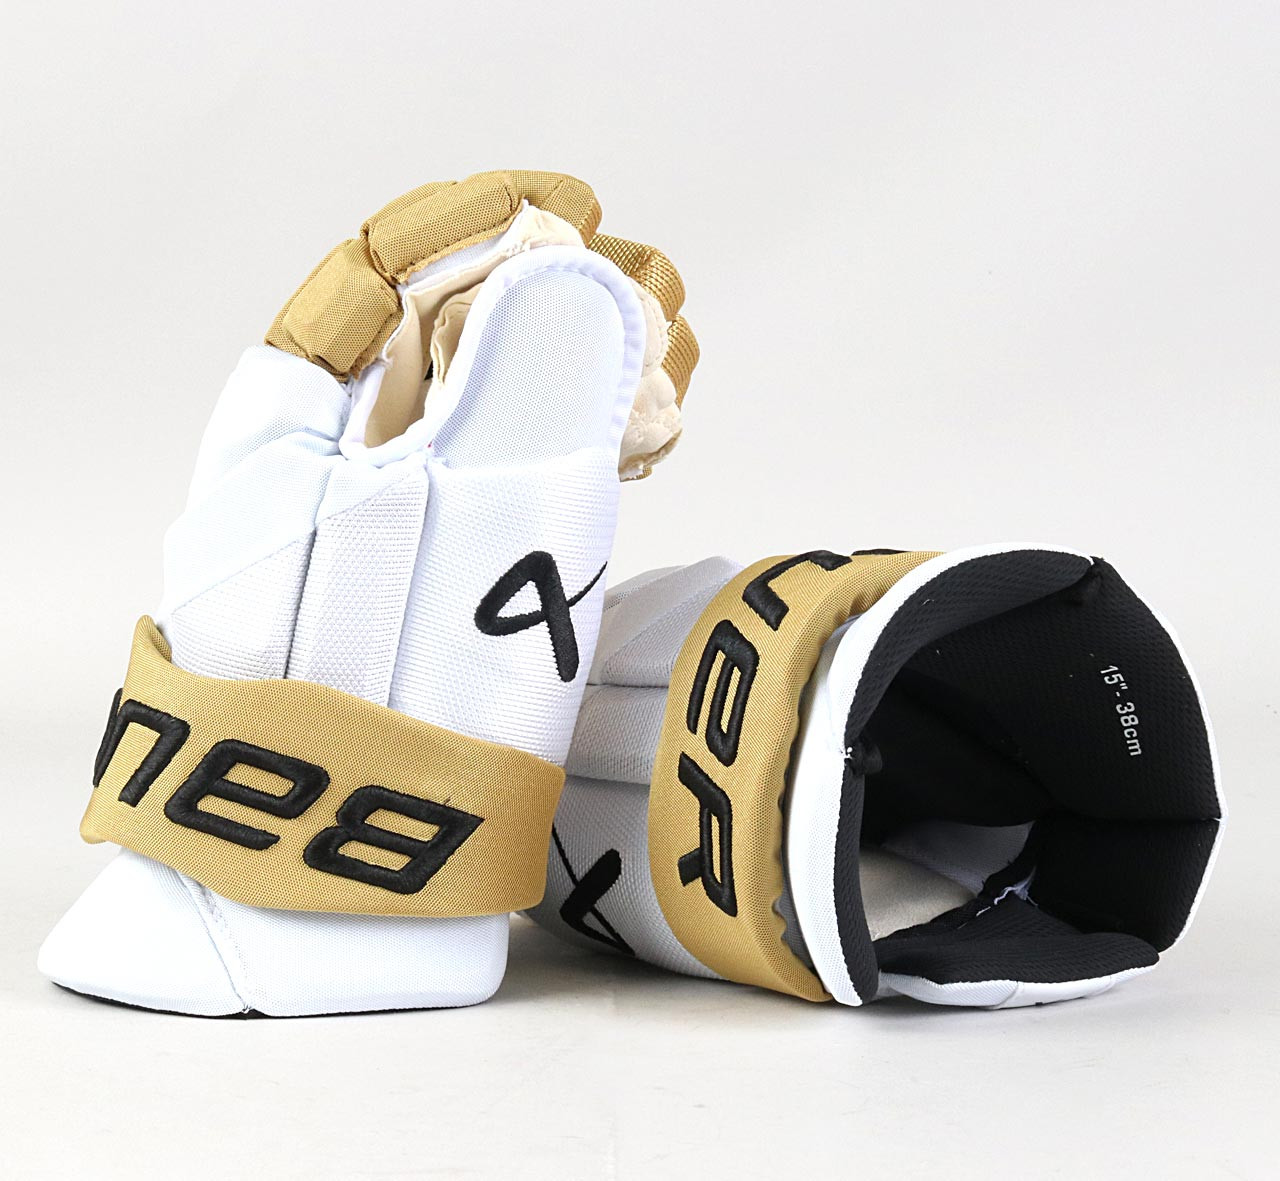 15" Bauer Vapor Hyperlite Gloves - Nicolas Roy Vegas Golden Knights #2 -  Pro Stock Hockey